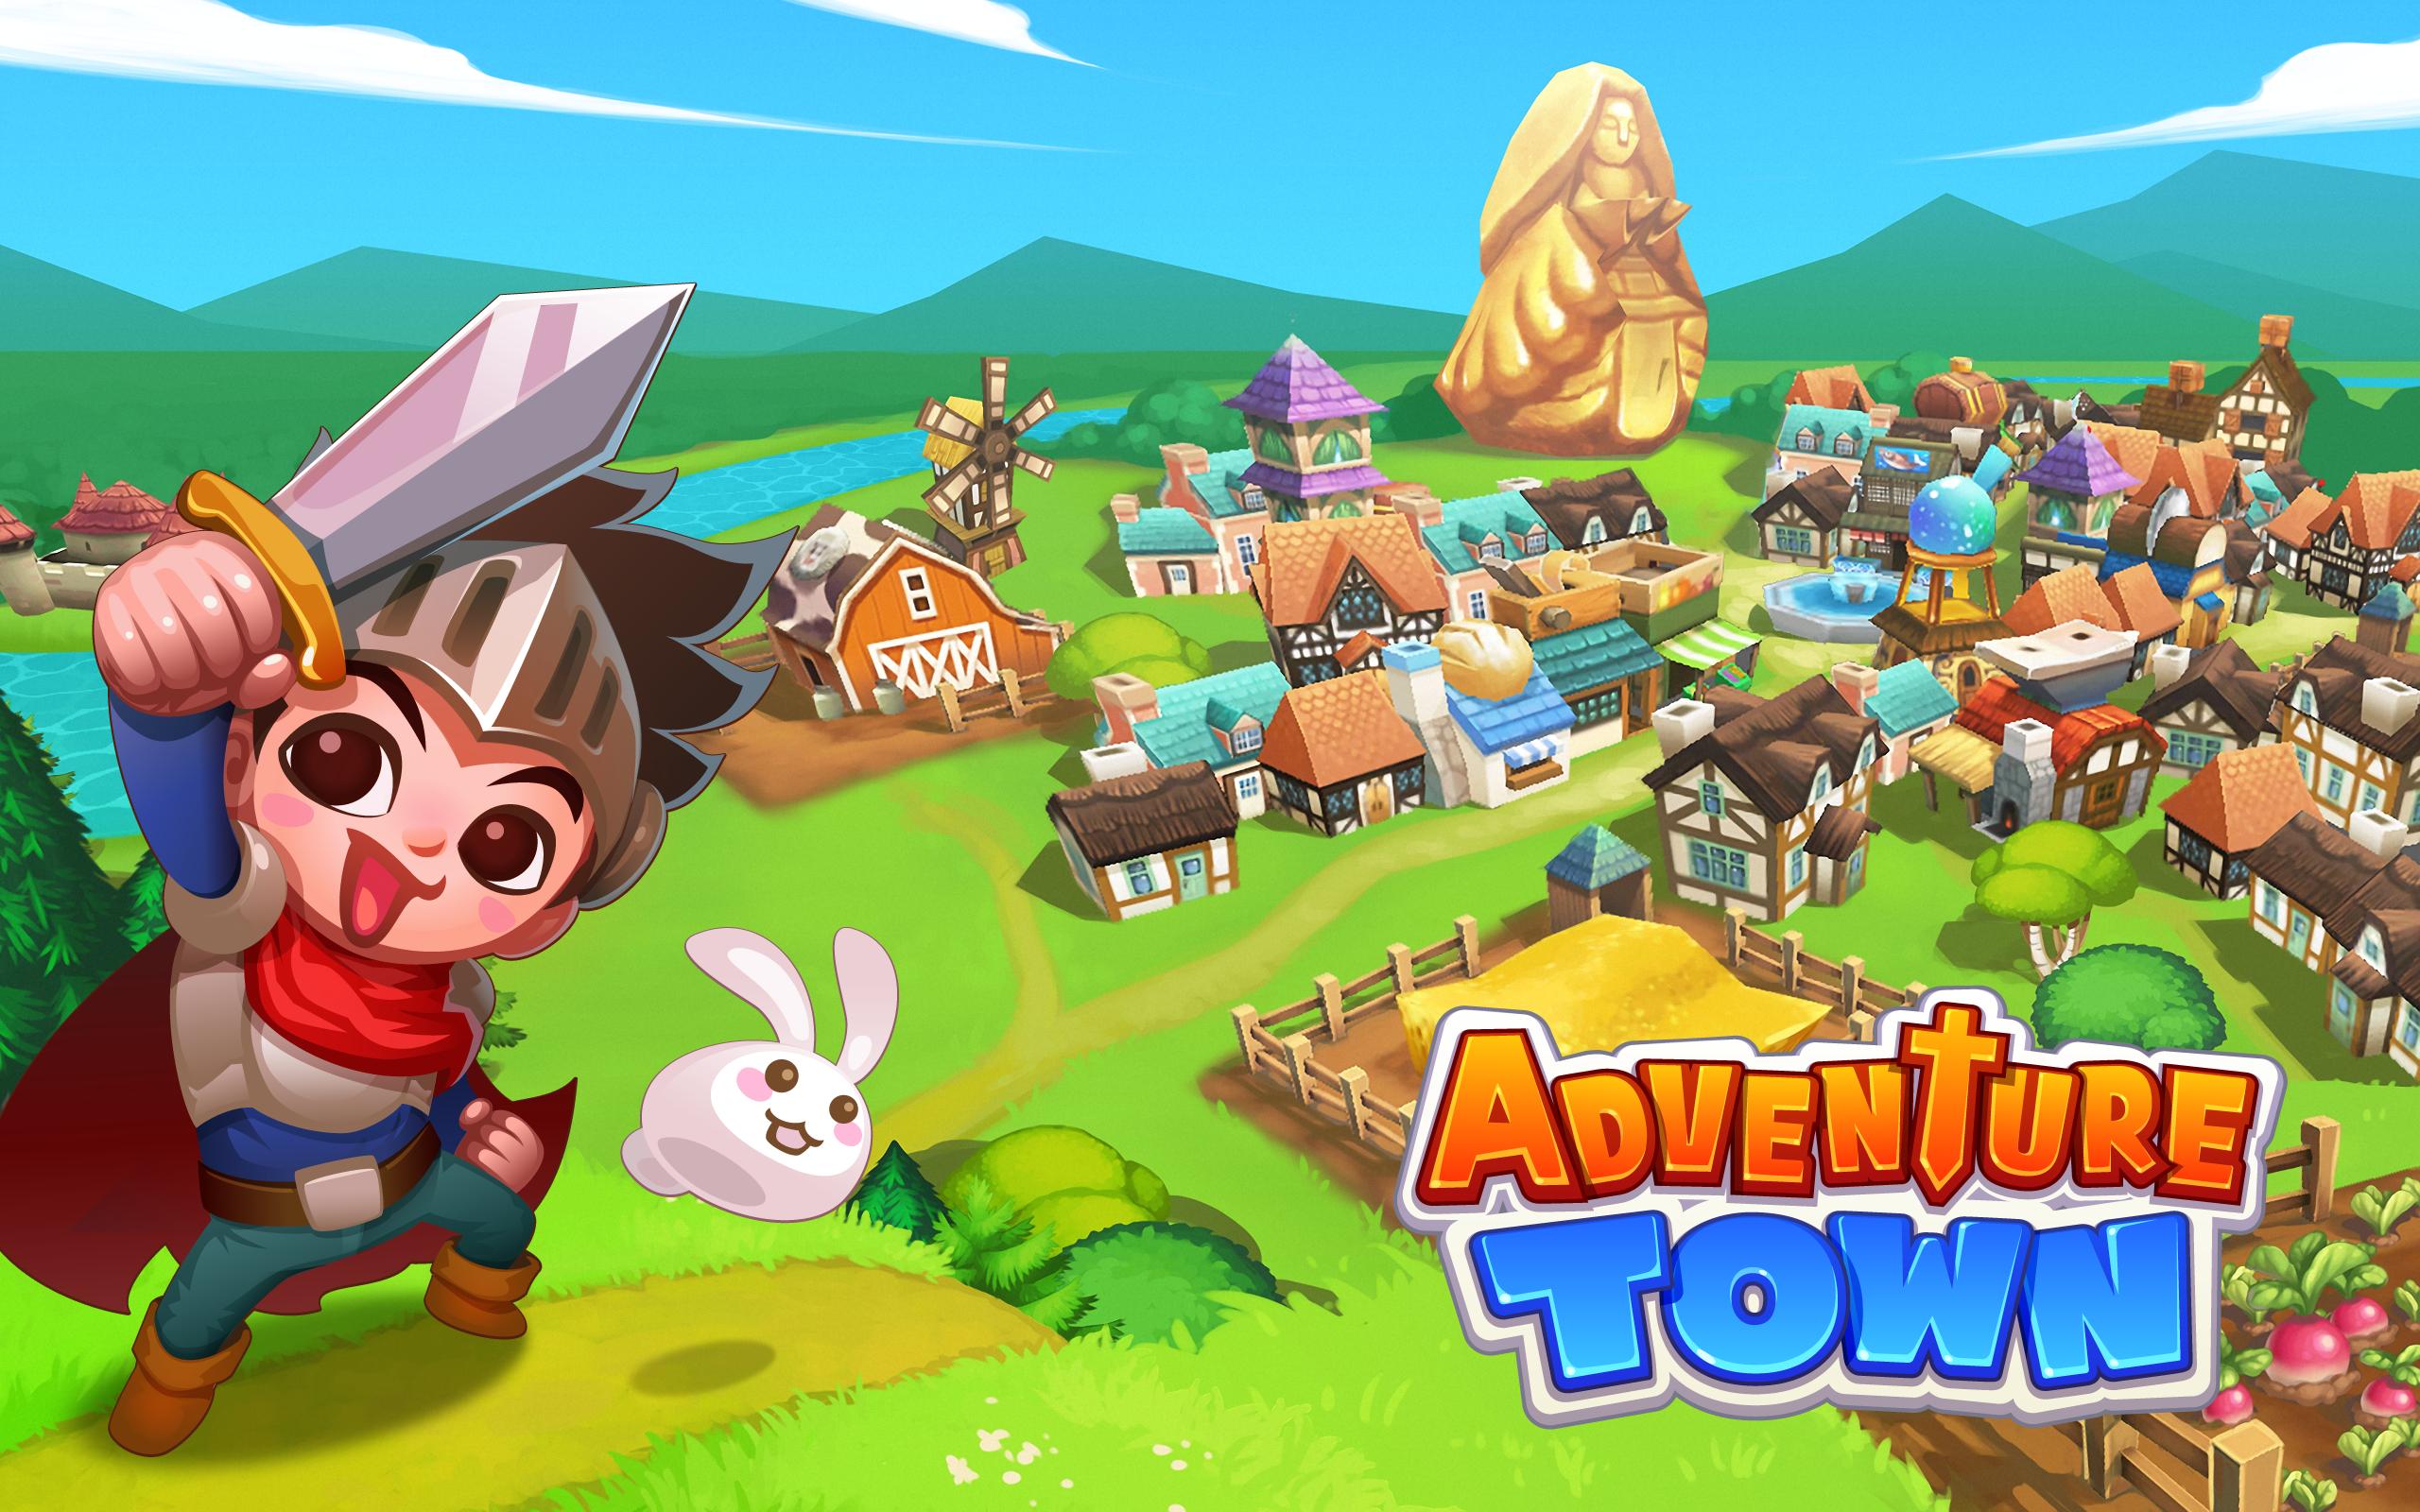 Download adventure game. Игры и приключения. Игра на андроид Adventure. Адвенчер игра. Town игра на андроид.